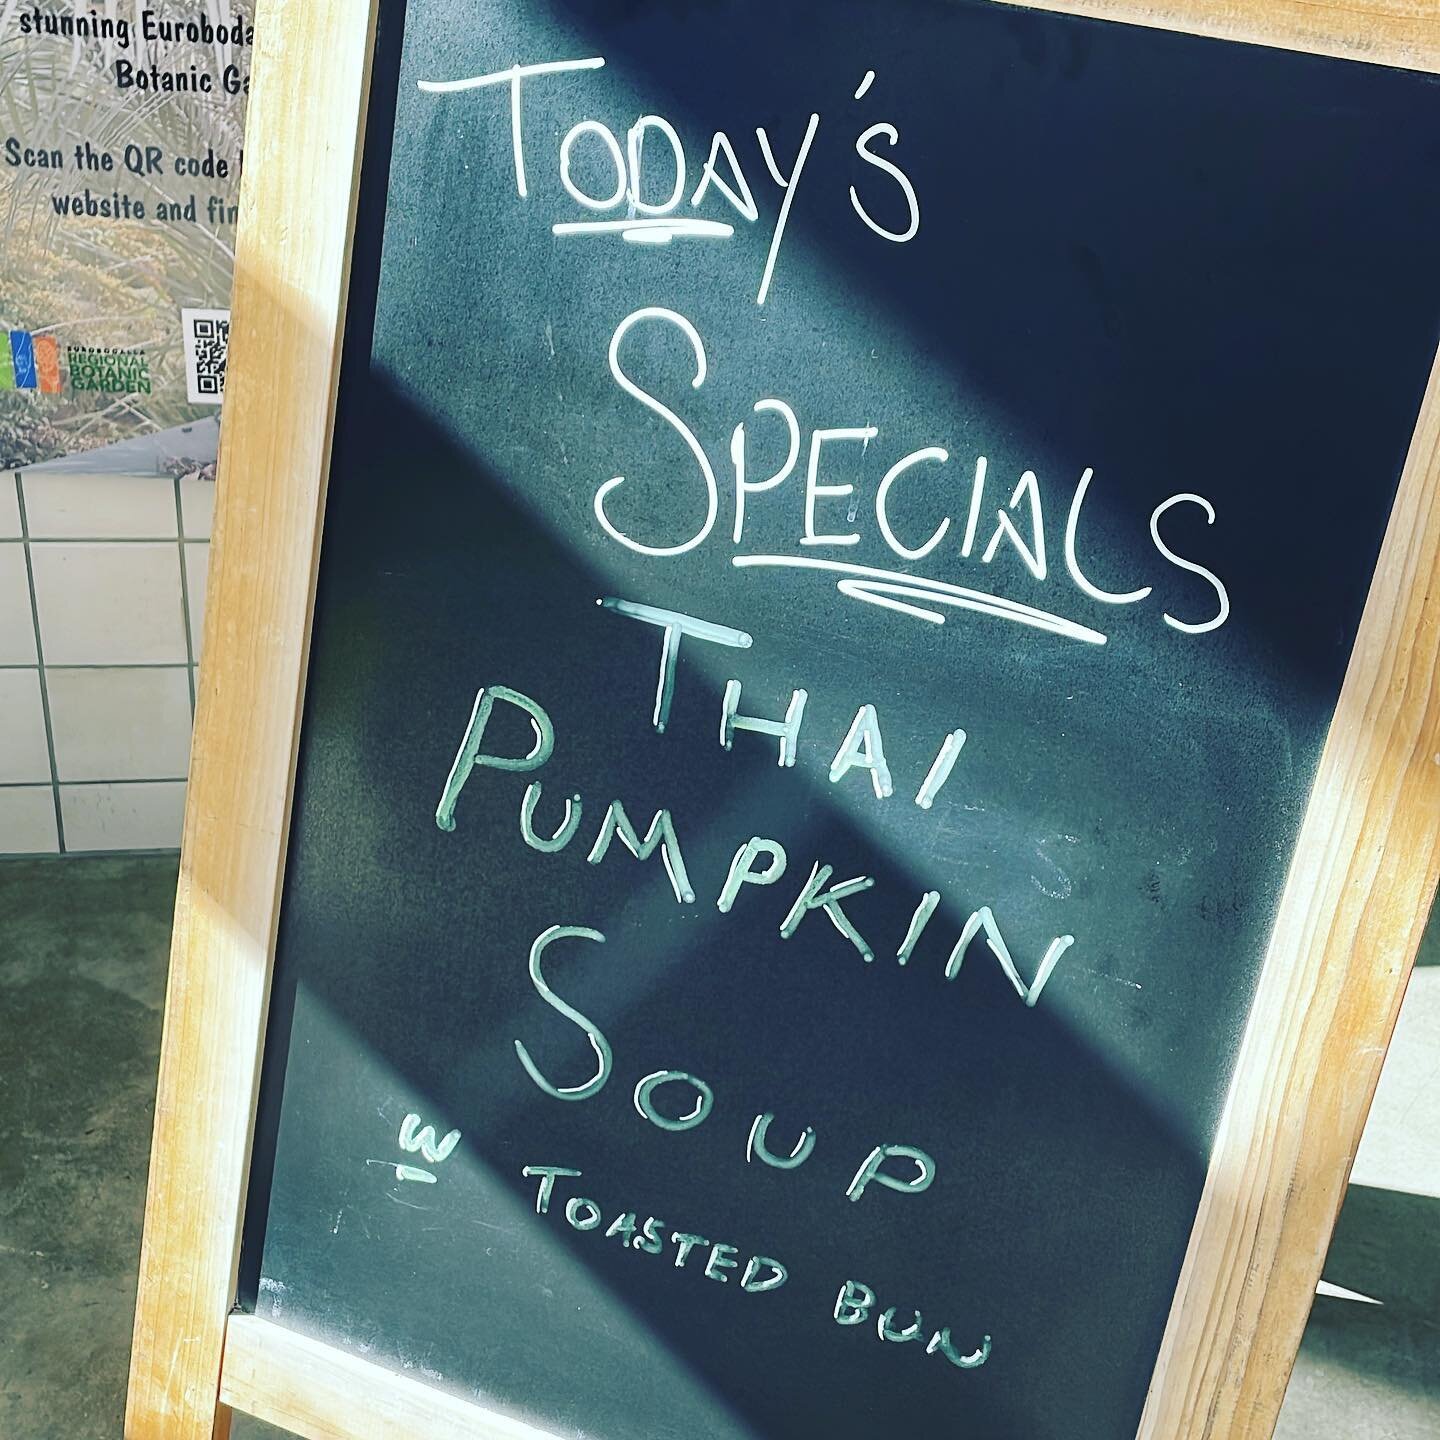 Spicy Thai Pumkin Soup, get it hot 🔥 
.
.
.
.
.

#mossycafe #seeyouatthemossy #cafe #coffee #broulee #mossypoint #falafel #falafelwrap #southcoastnsw  #nsw #wheretoeat #whattoeat #visitbatemansbay #visitmoruya #visitnsw #nsw #mossyontrain #batchbrew